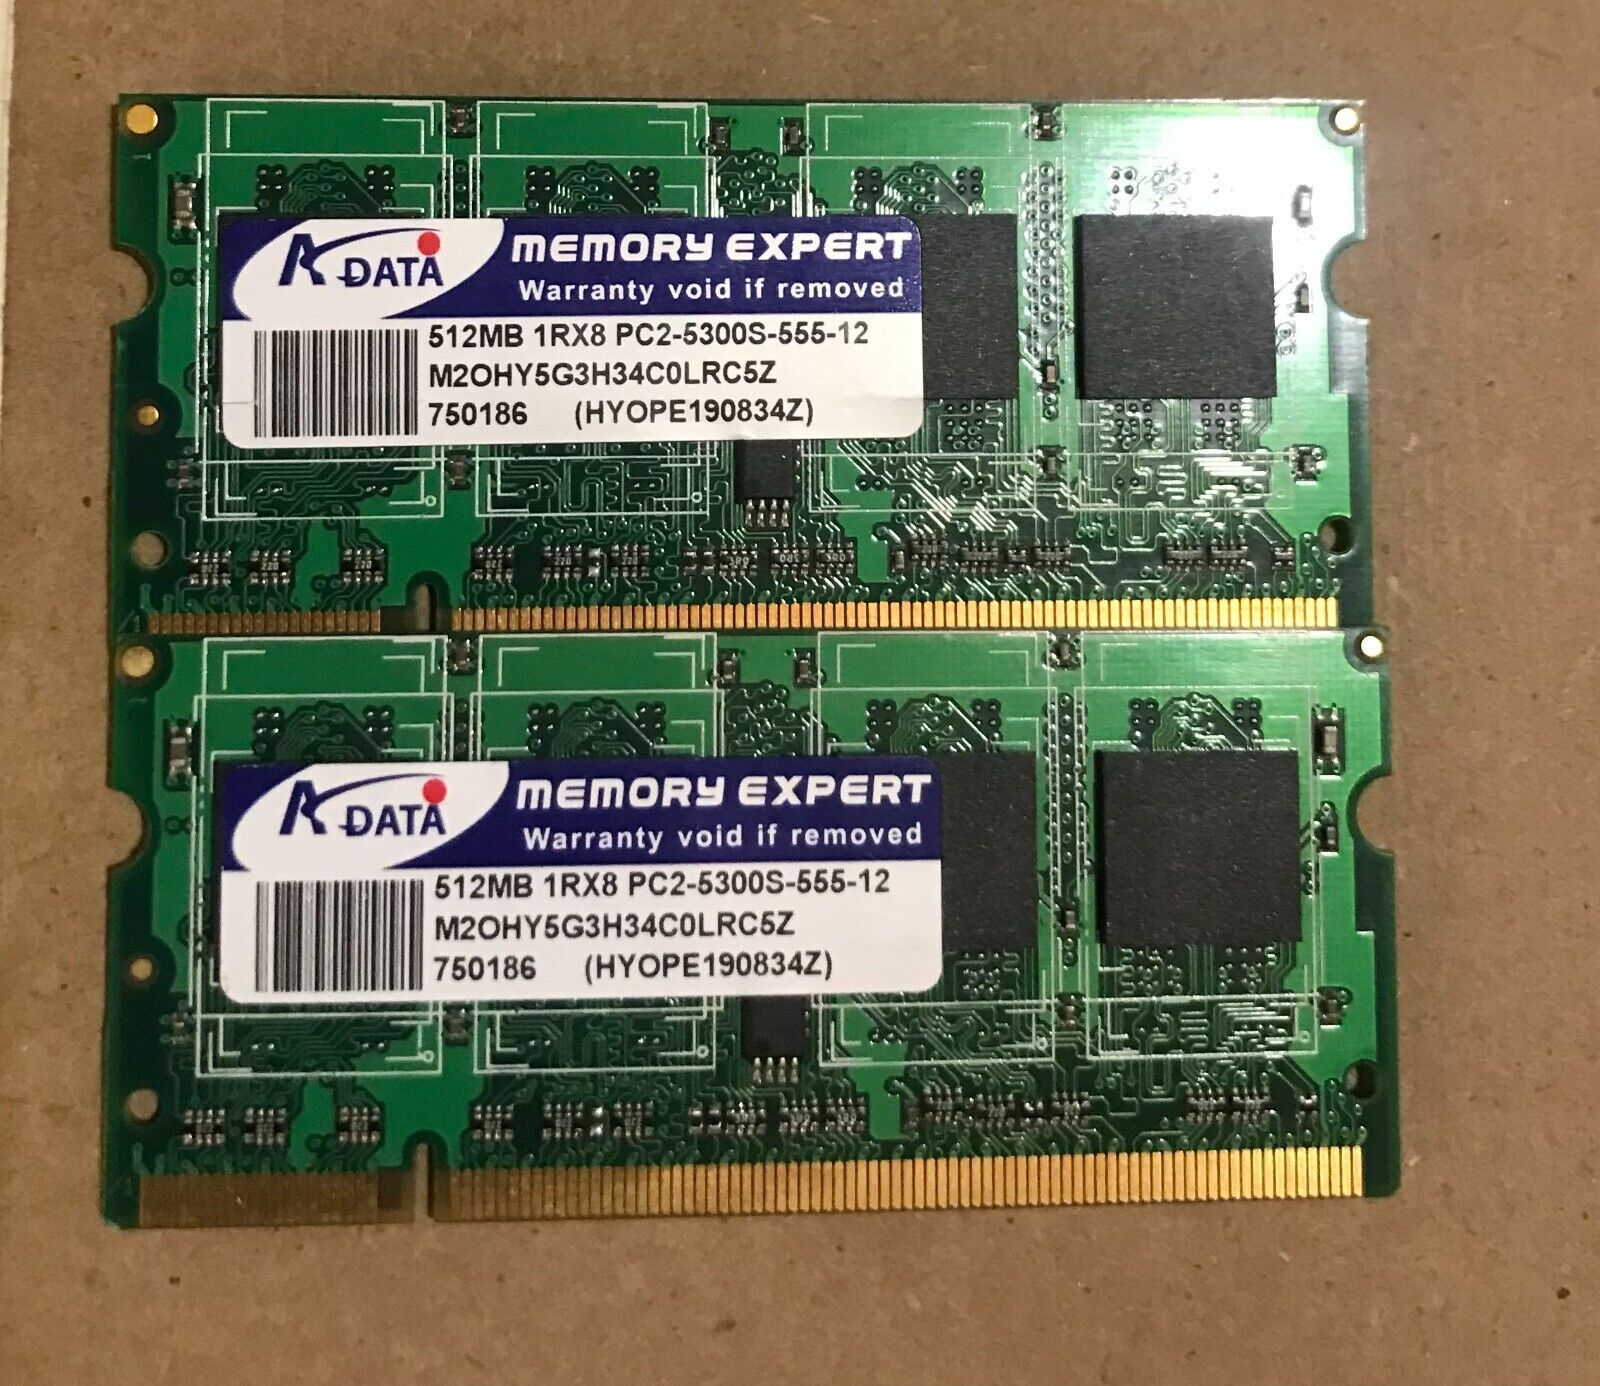 Adata 1GB (2x512mb) 1Rx8 PC2-5300S-555-12 DDR2 non-ECC Laptop Memory SODIMM Ram